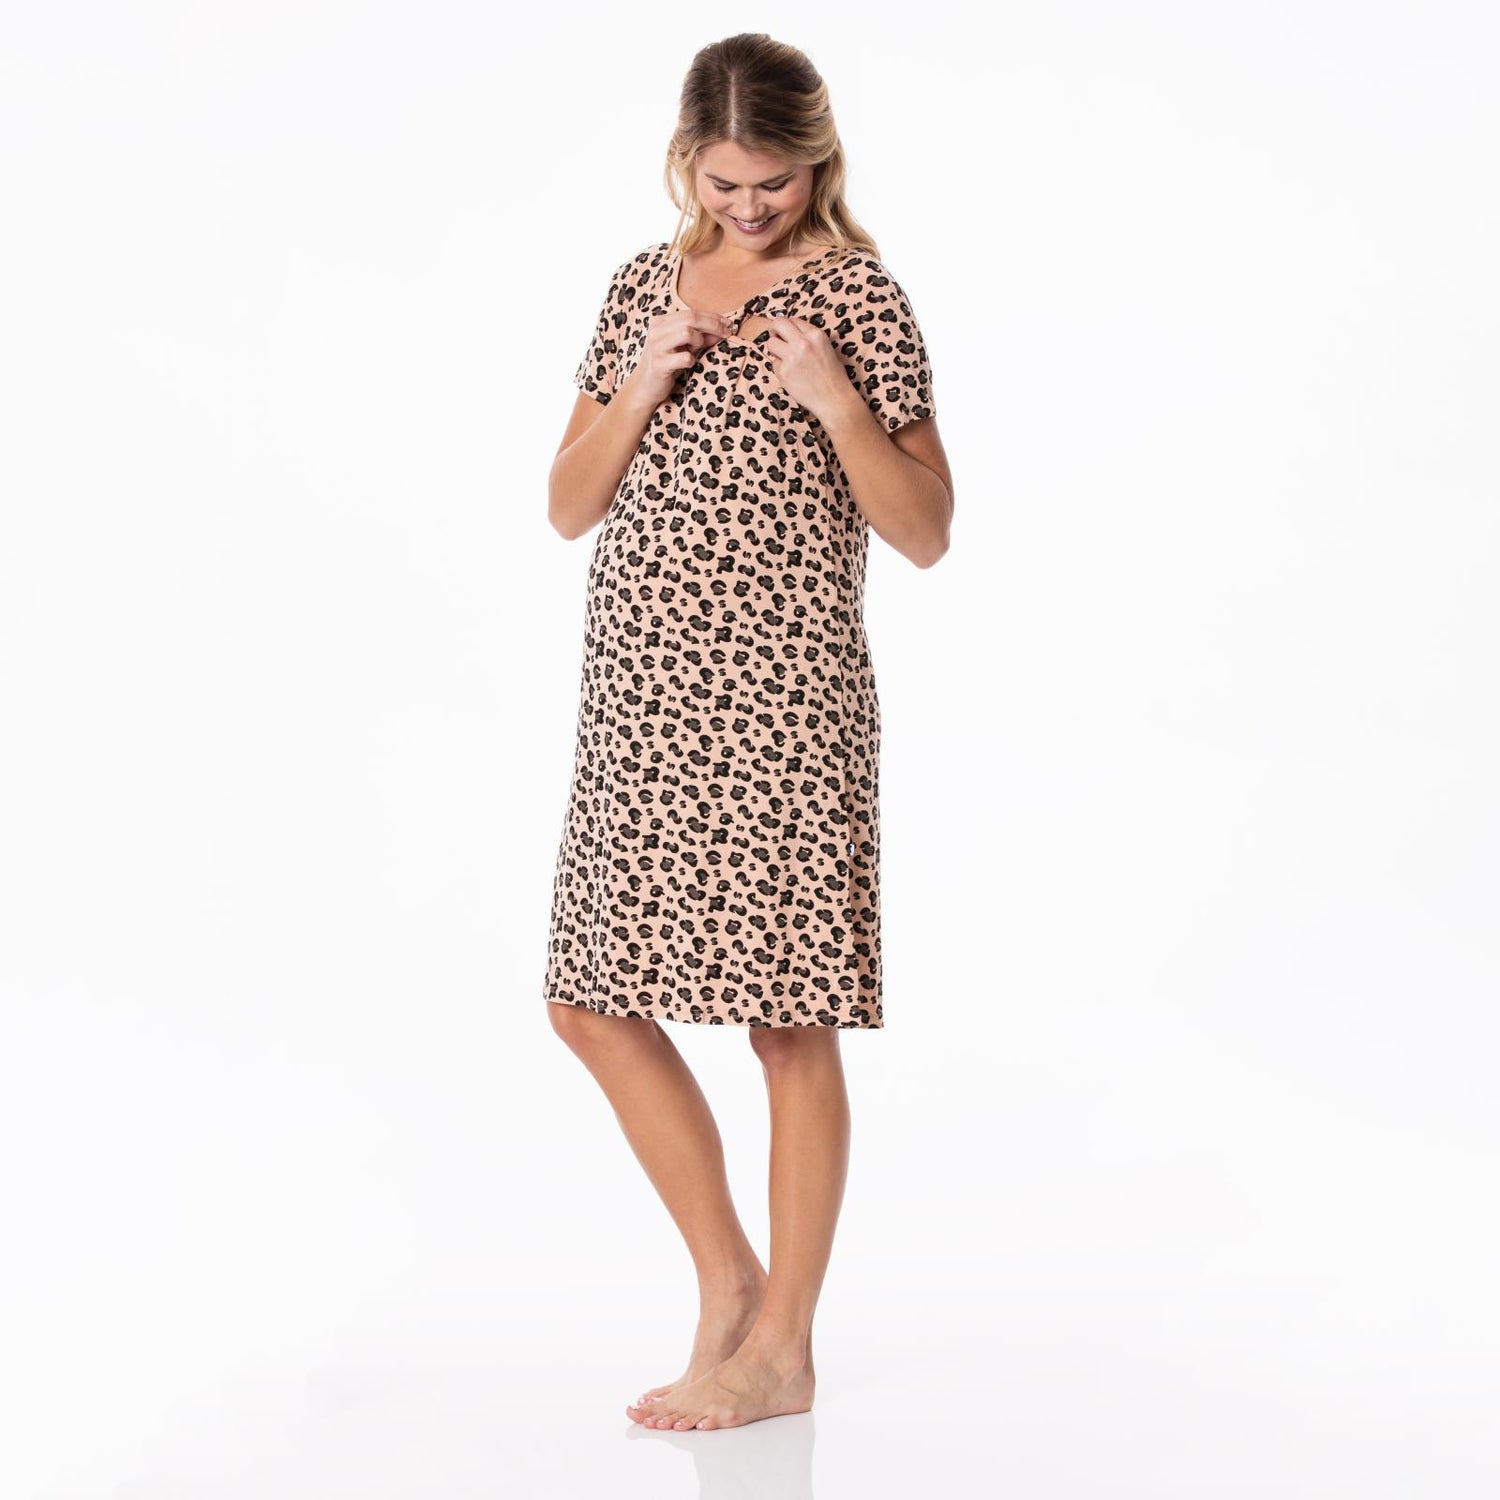 Women's Print Hospital Gown in Suede Cheetah Print